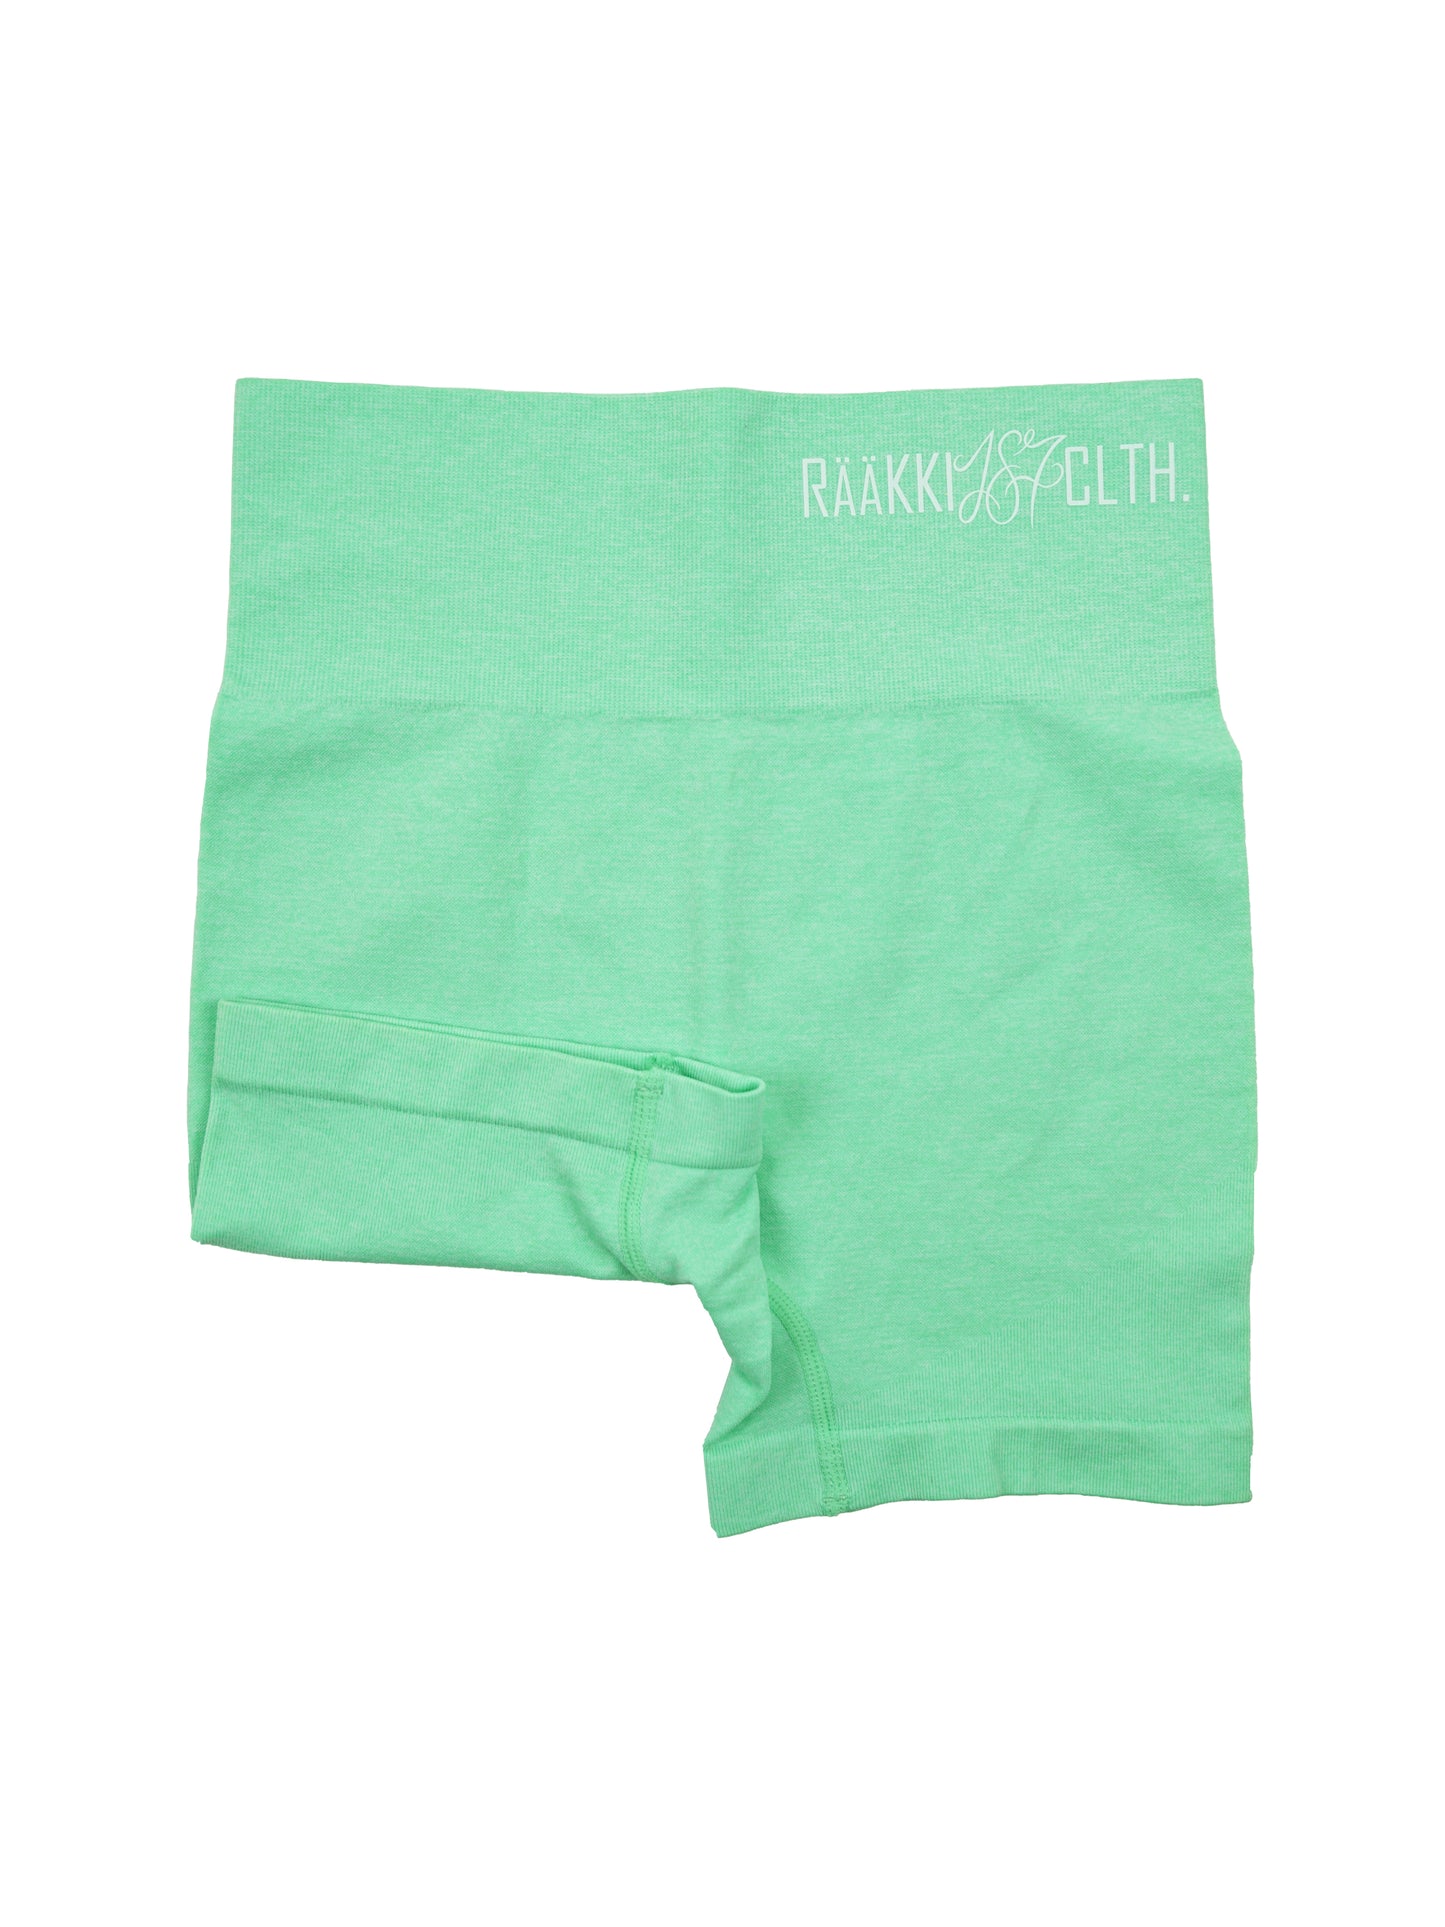 Simply Seamless Shorts - Fresh Mint